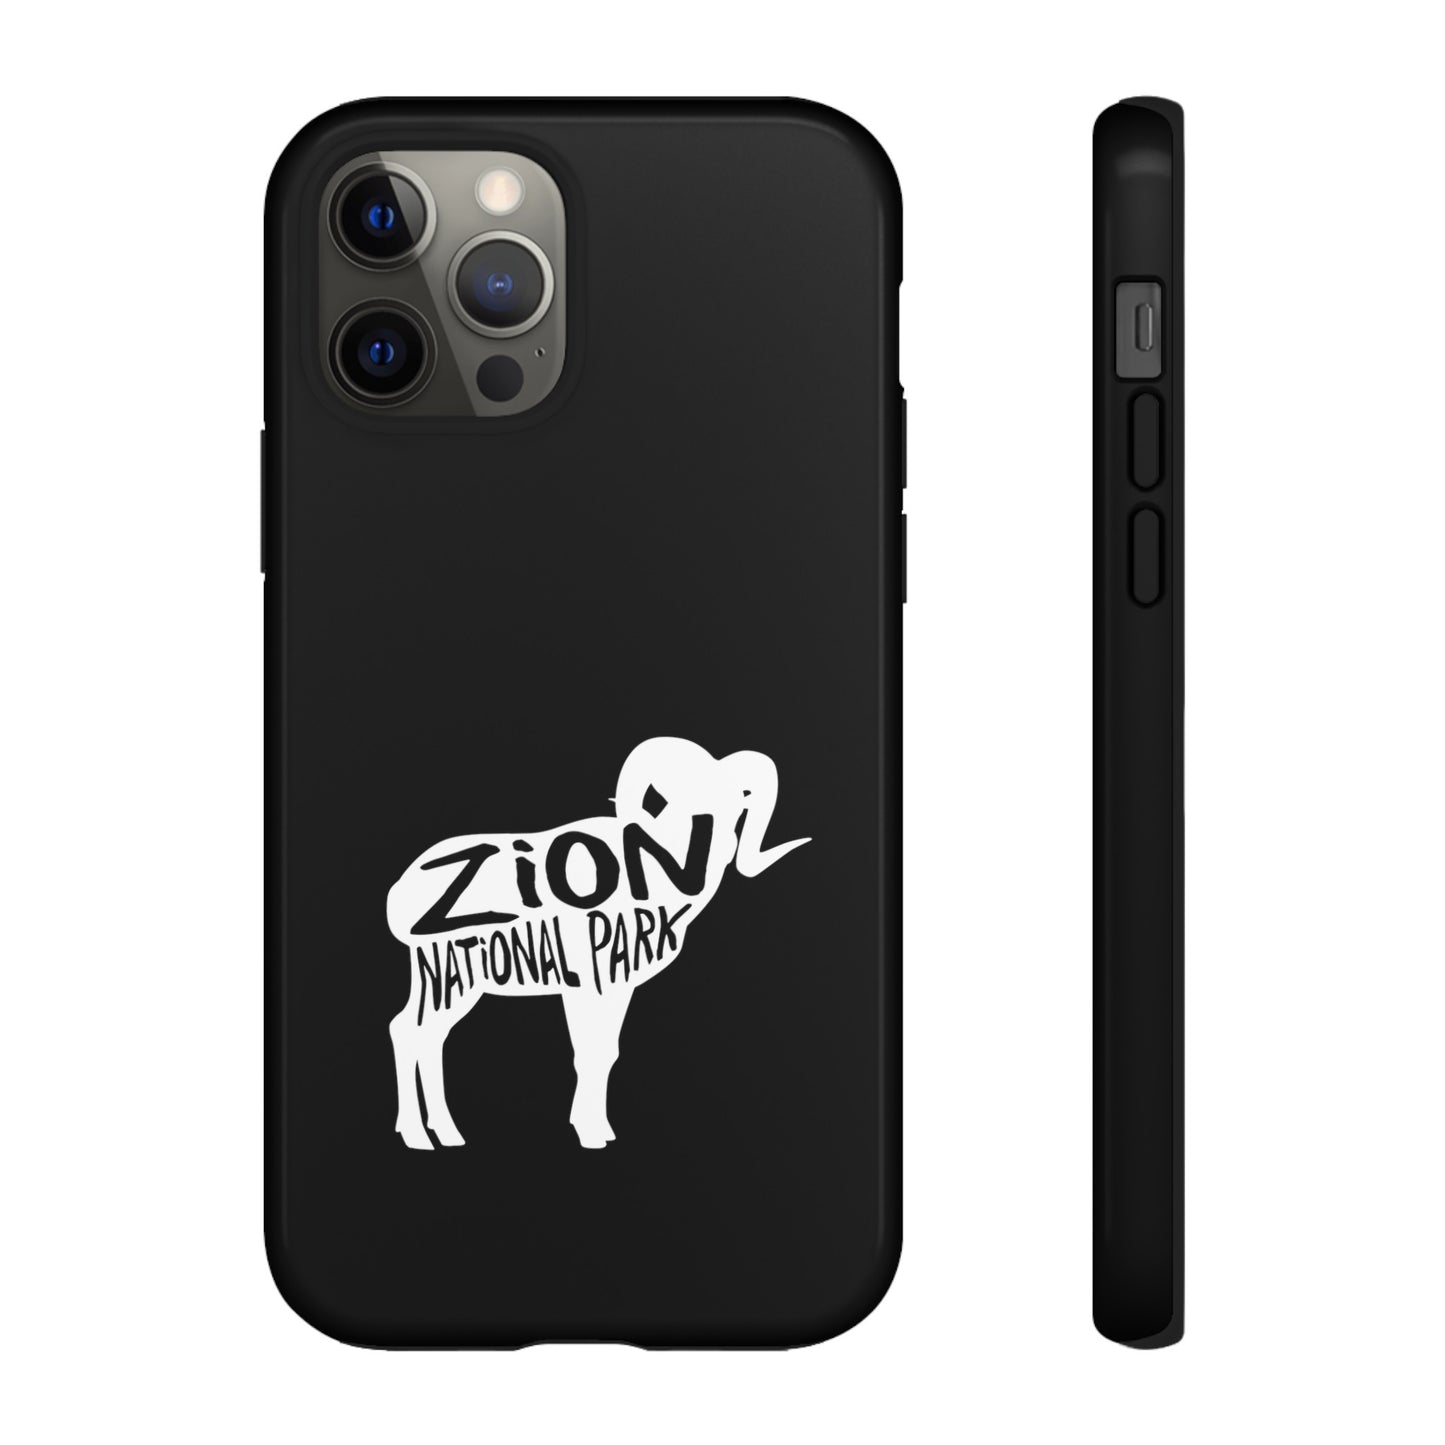 Zion National Park Phone Case - Bighorn Sheep Design